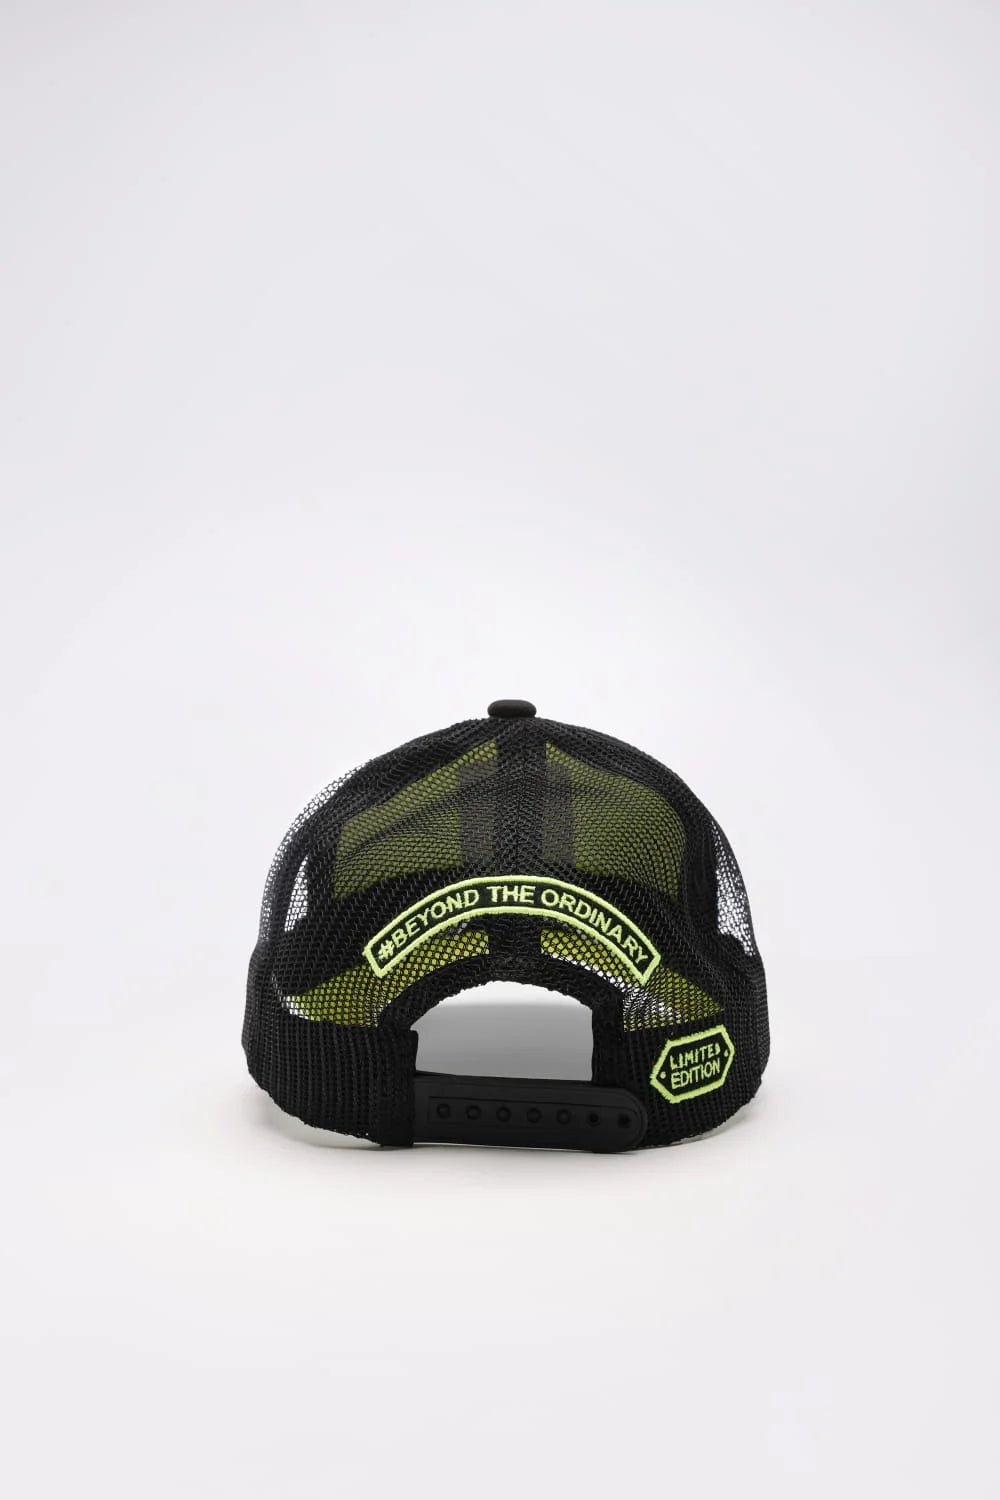 Unisex  Neon & Black Trucker cap, has a visor by One Player